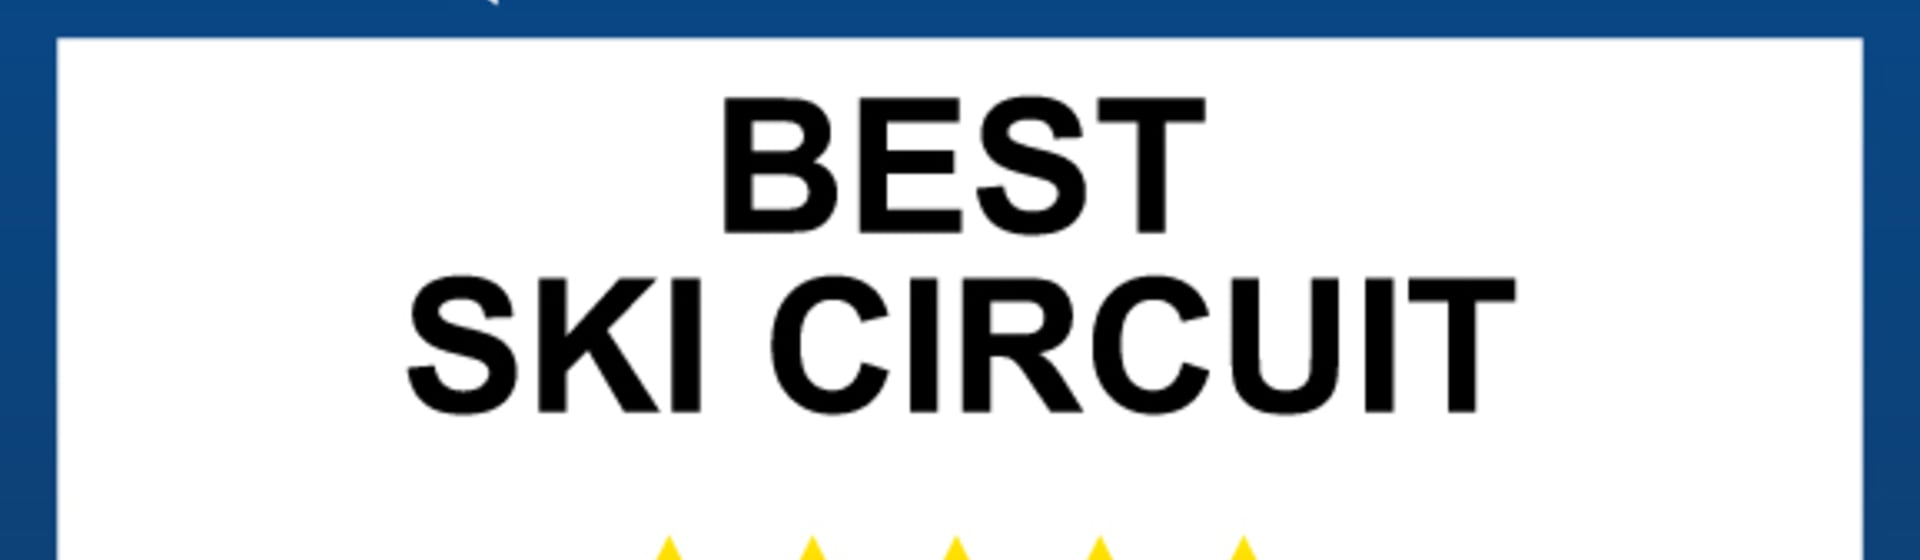 Arabba / Marmolada AWARDED AS "BEST SKI CIRCUIT" WITH SELLARONDA